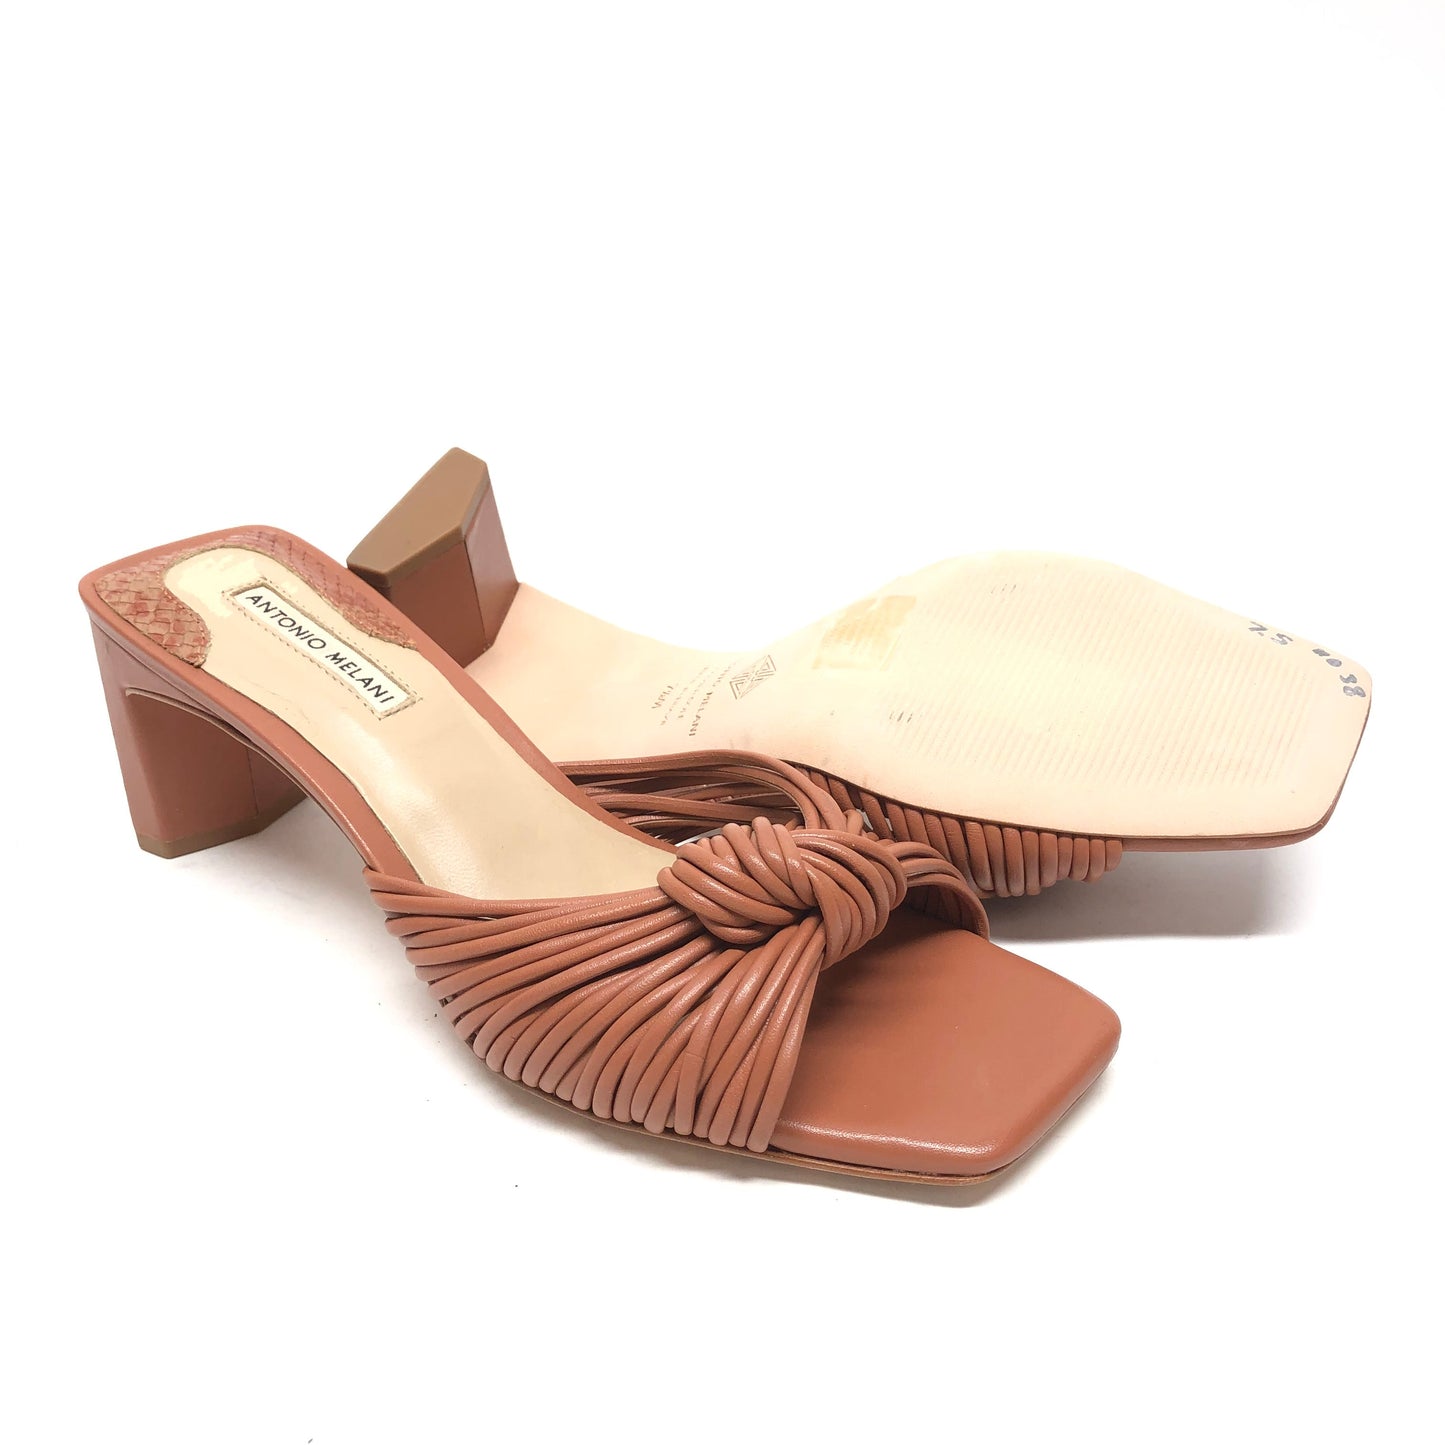 Sandals Heels Kitten By Antonio Melani  Size: 7.5